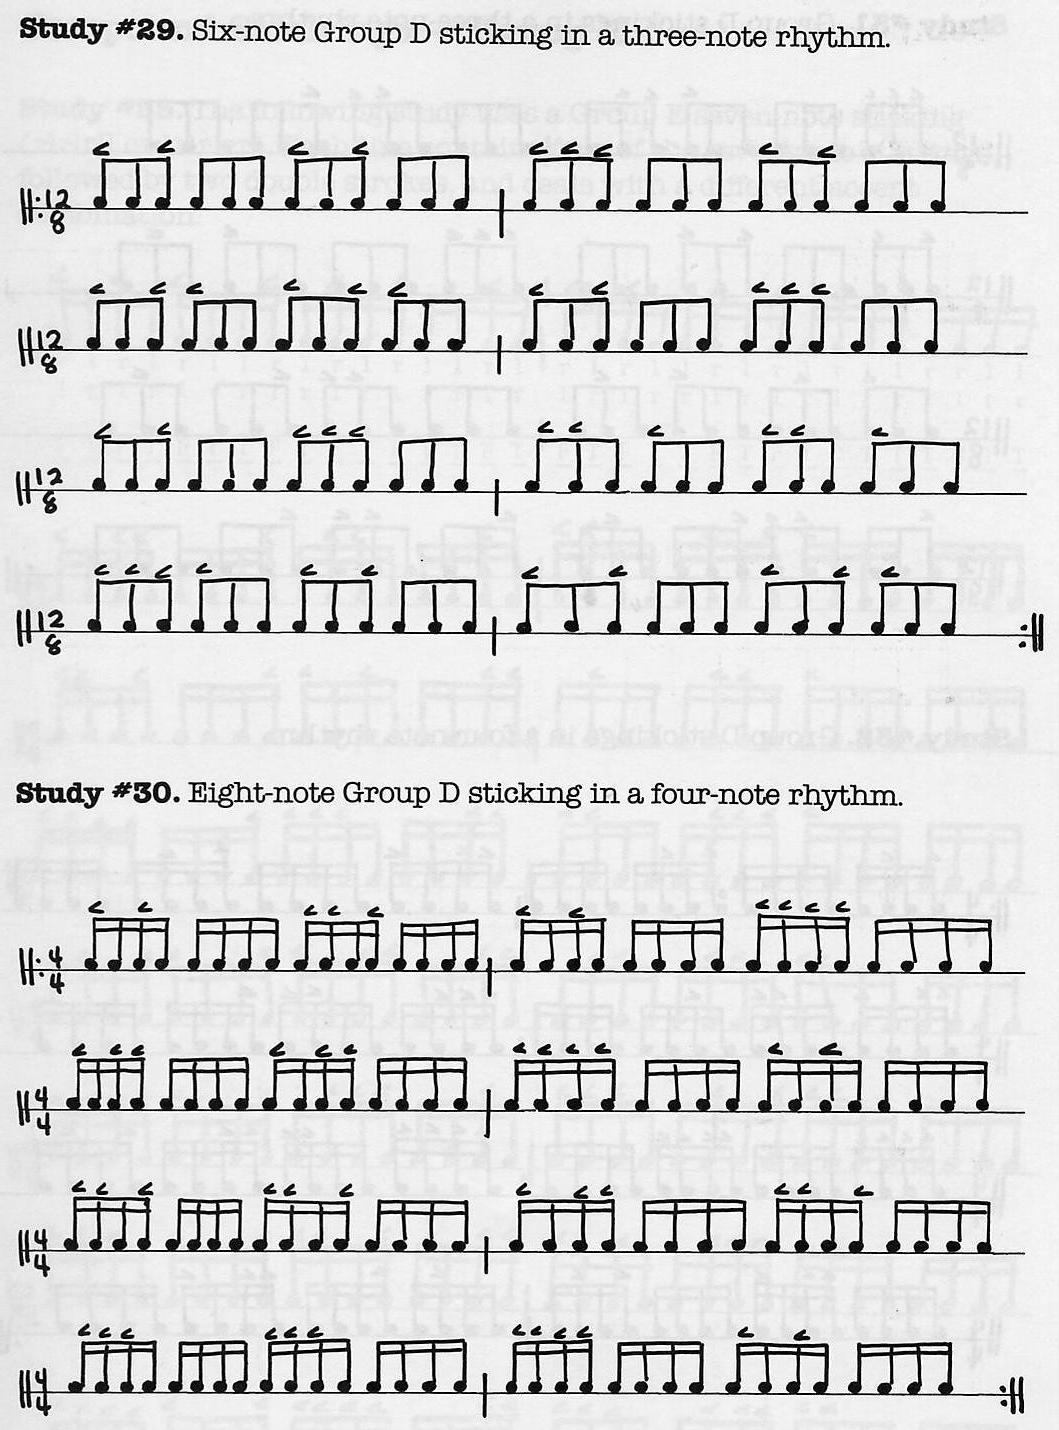 Gary Chaffee - Sticking patterns - chaffee18.jpg